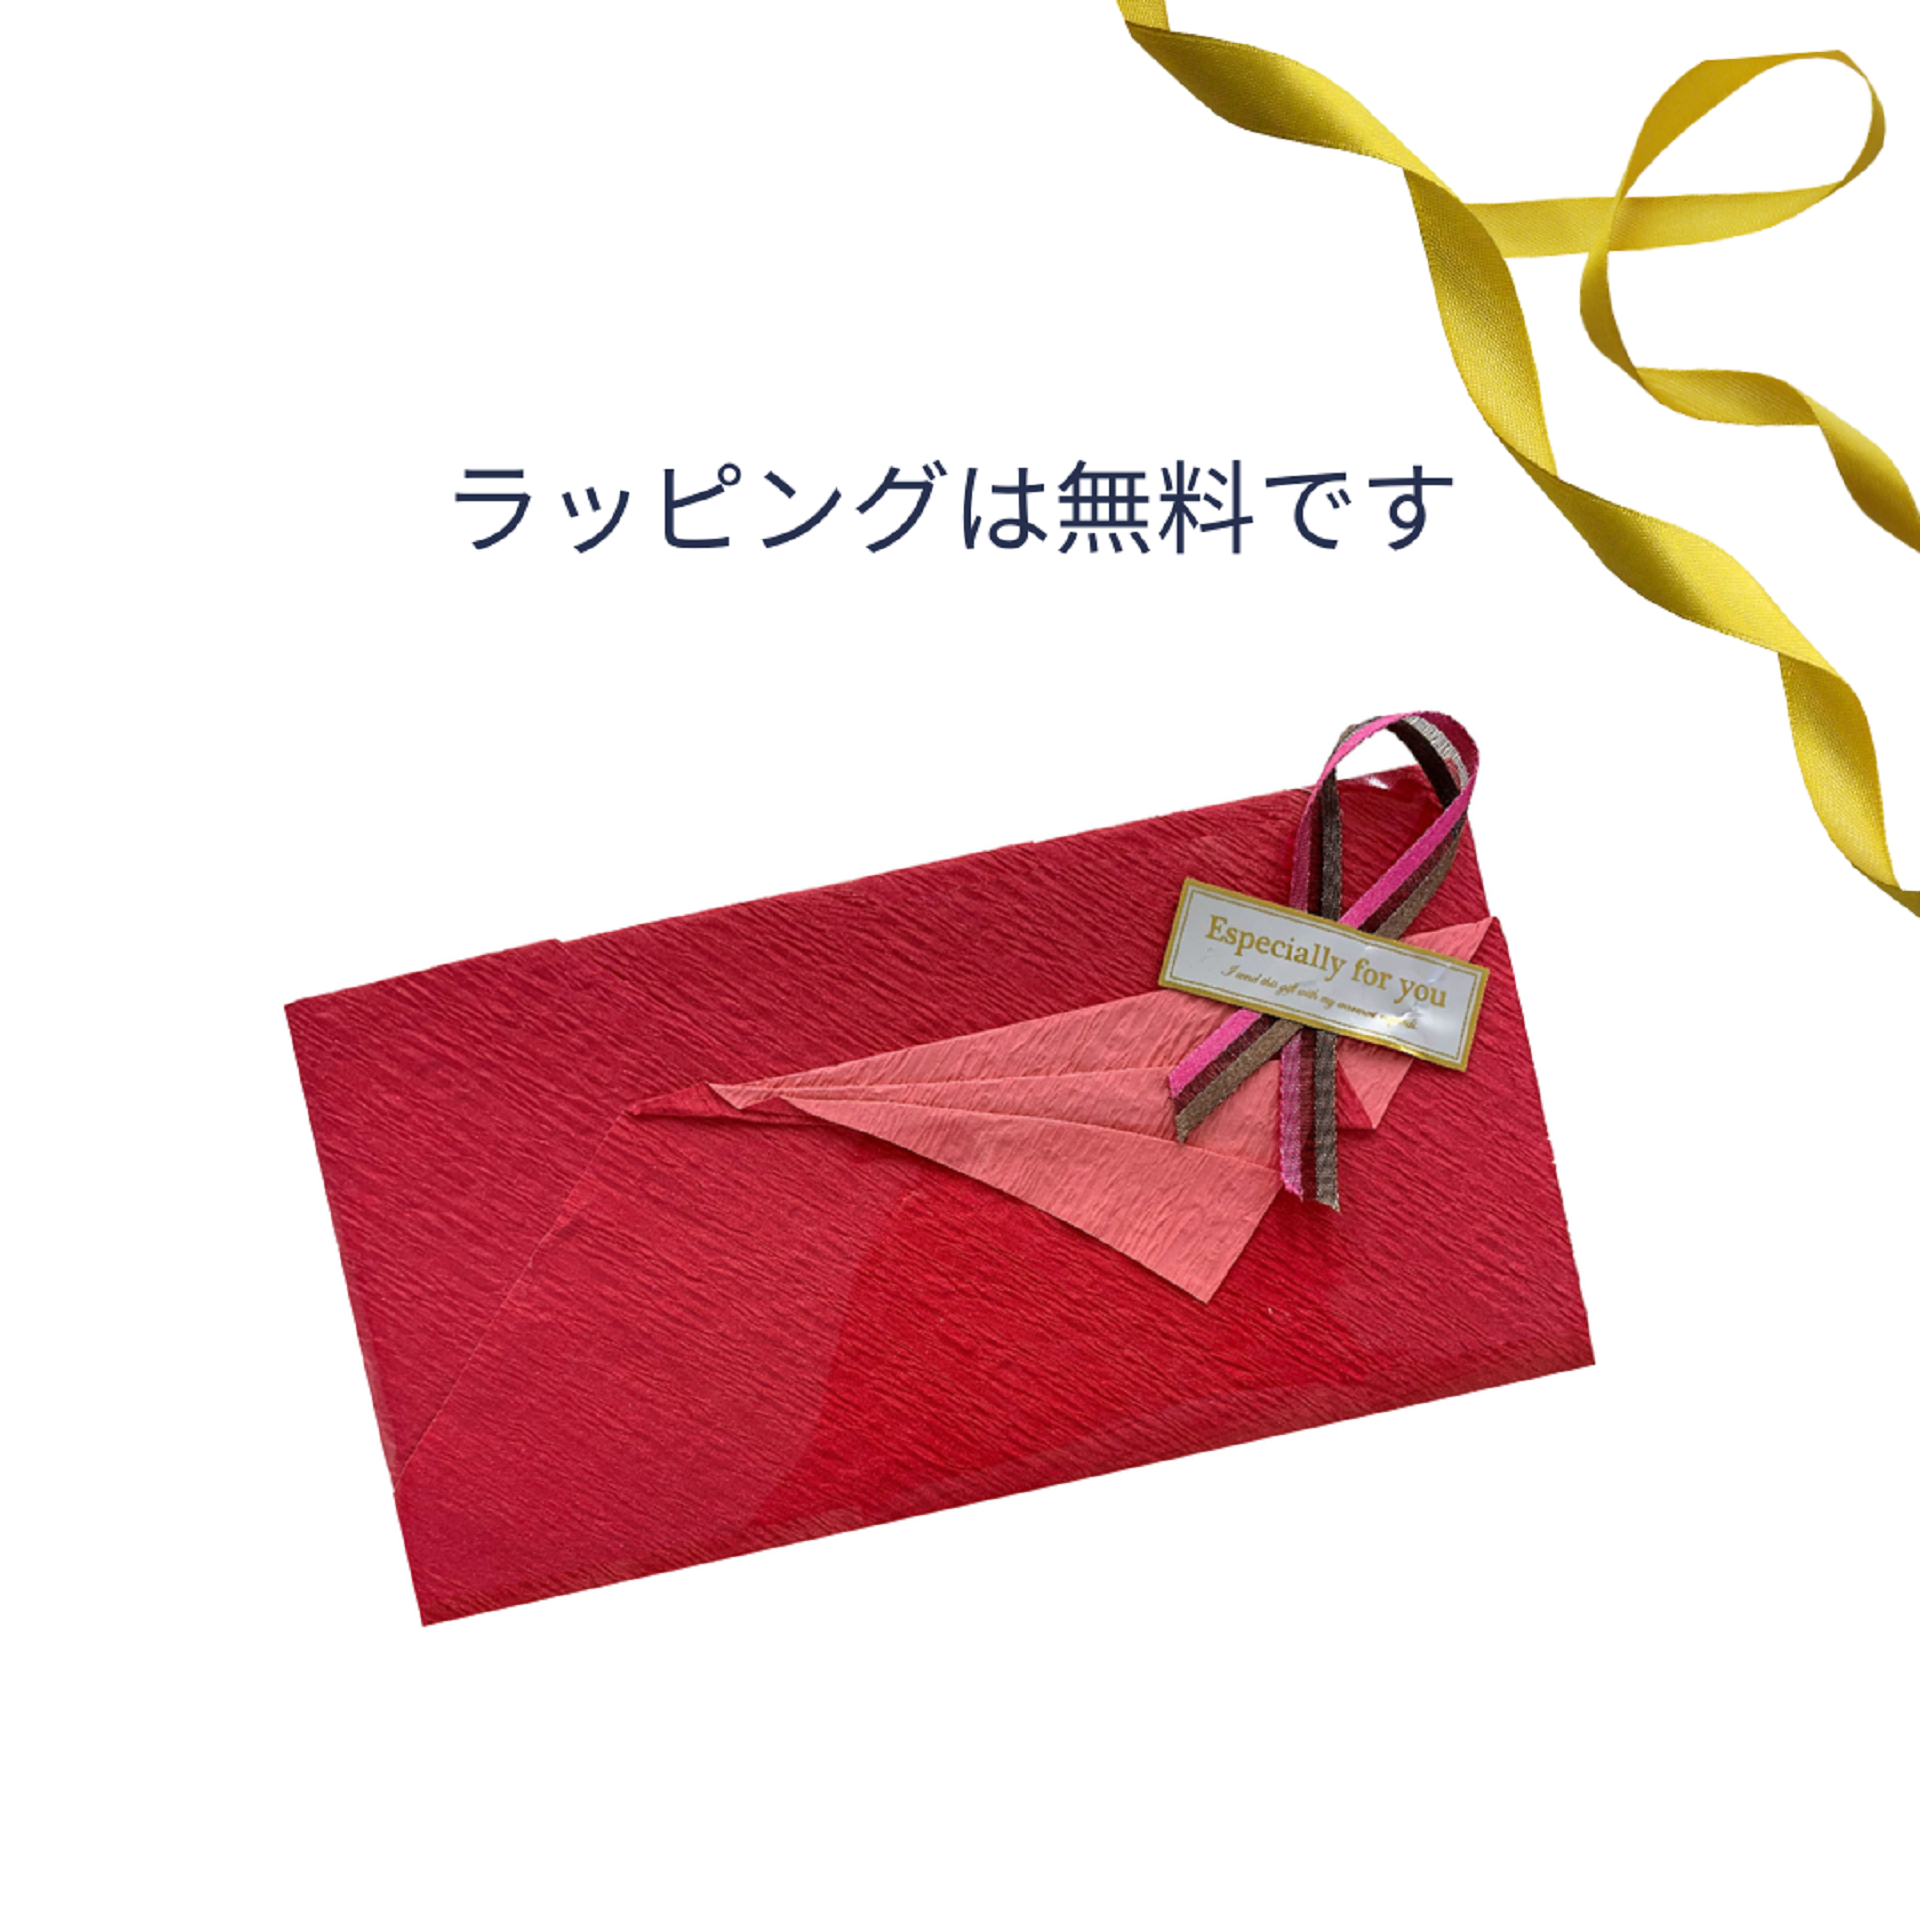 Avoire 3,000 yen gift certificate